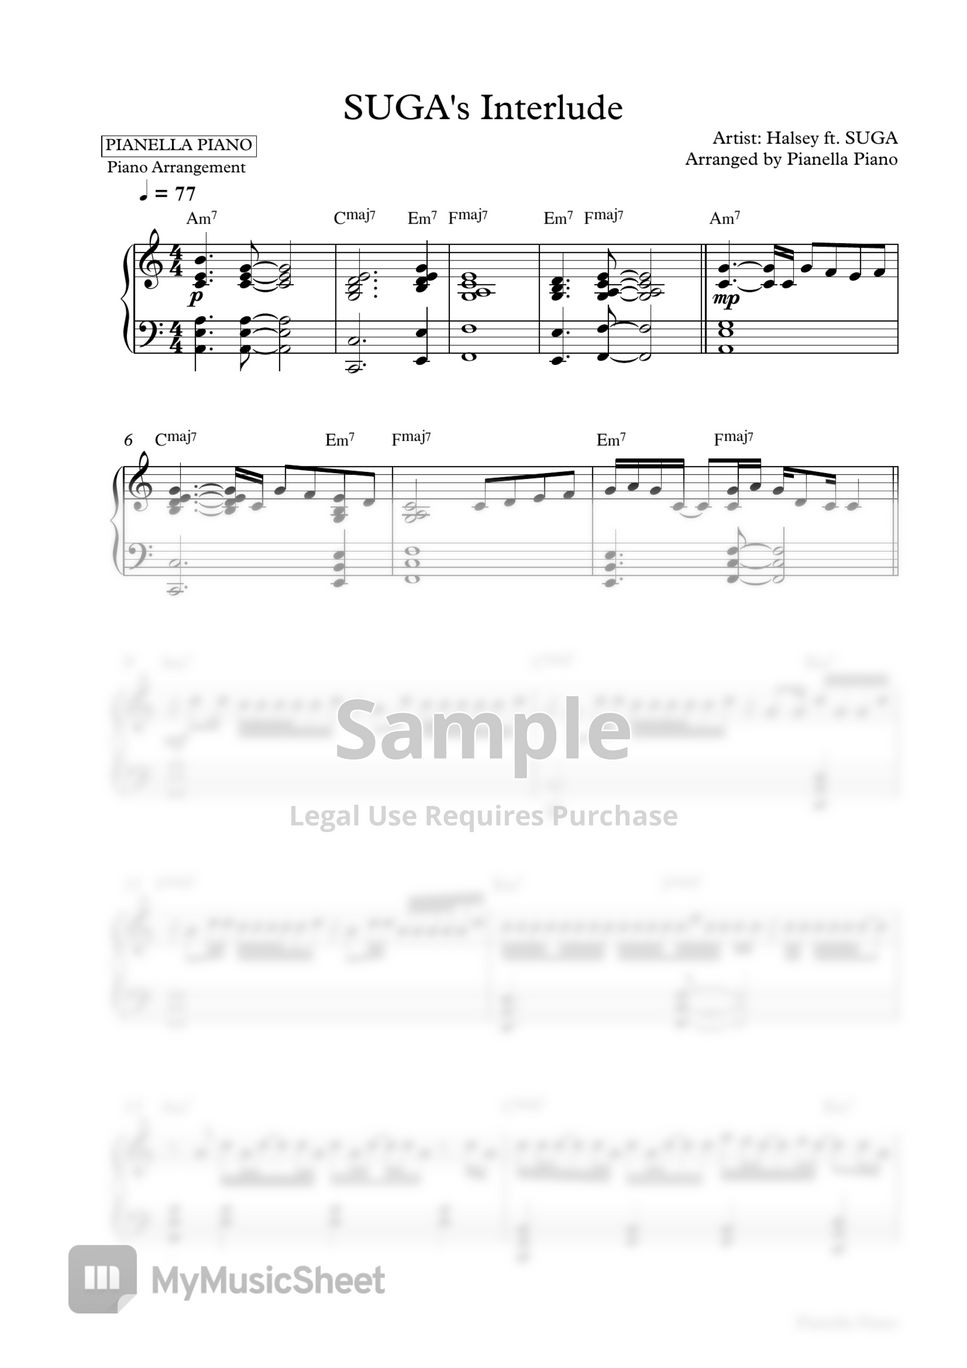 Halsey ft. SUGA - SUGA's Interlude (Piano Sheet) by Pianella Piano